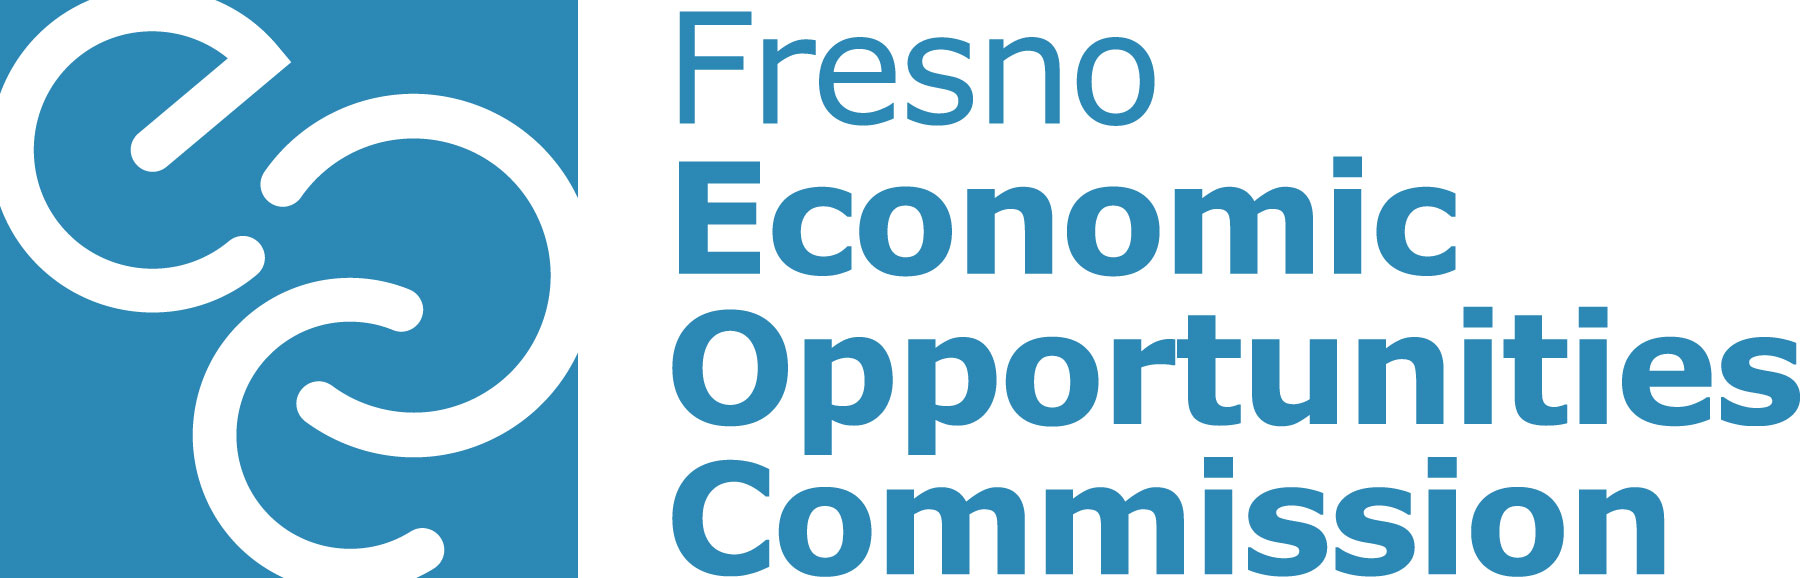 Fresno Economic Opportunities Commission